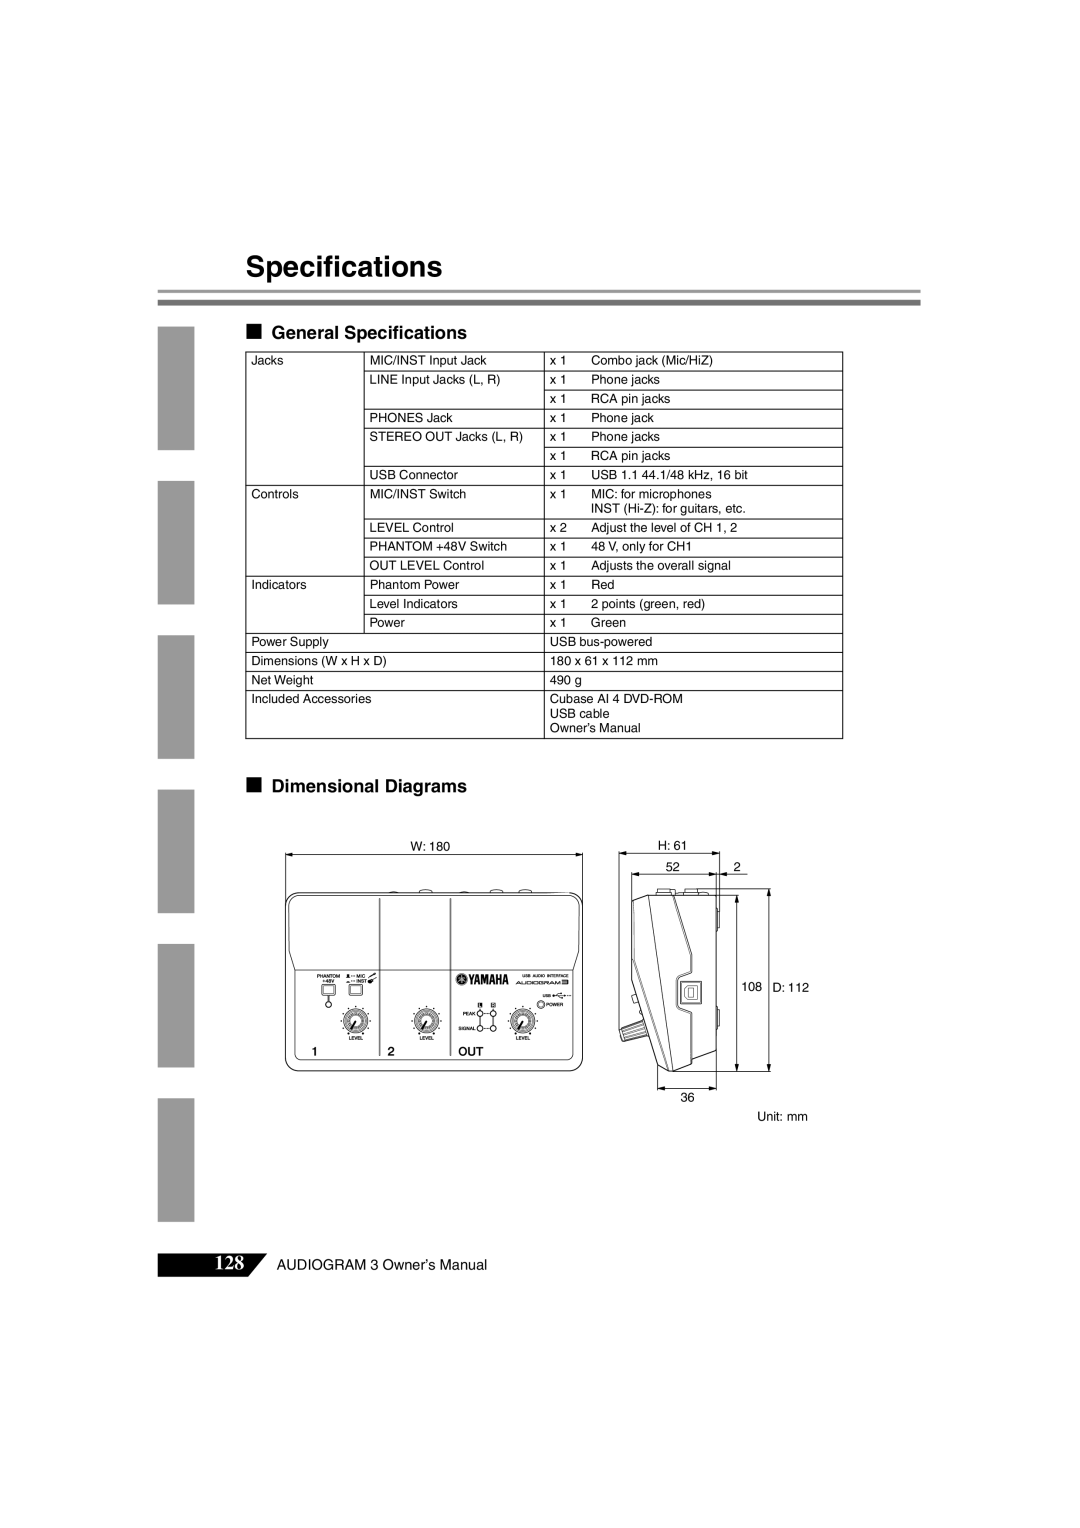 Yamaha Audiogram 3 owner manual General Speciﬁcations, Dimensional Diagrams 